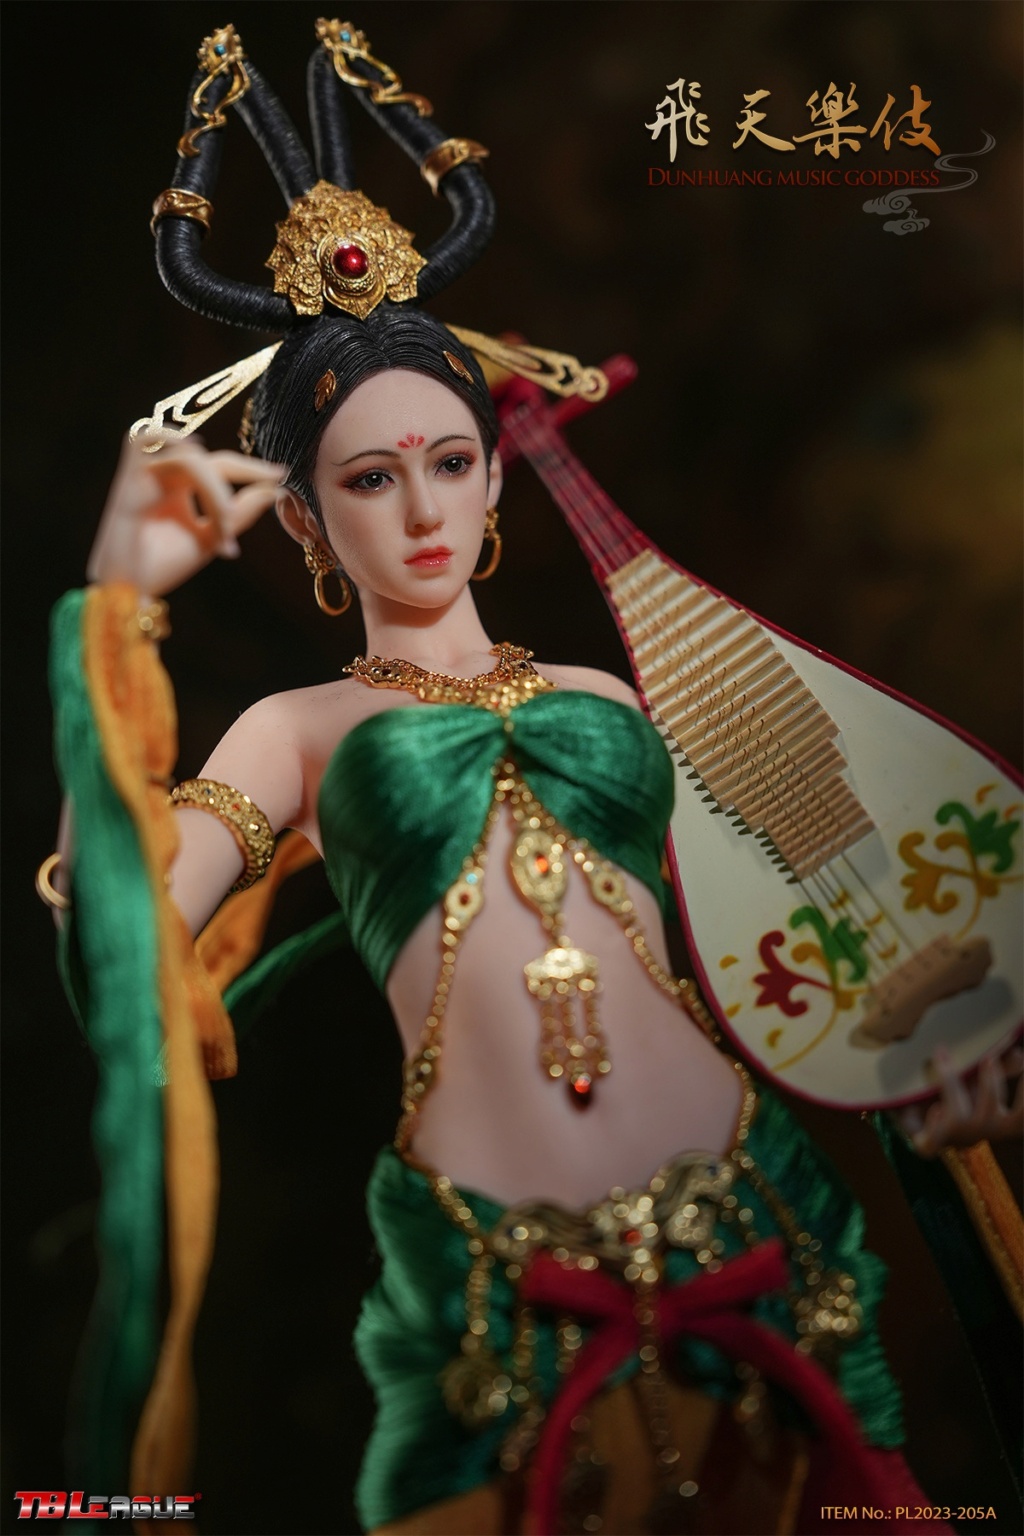 TBLeague - NEW PRODUCT: TBLeague: PL2023-205 1/6 Scale Dunhuang Music Goddess (2 versions) 15121311